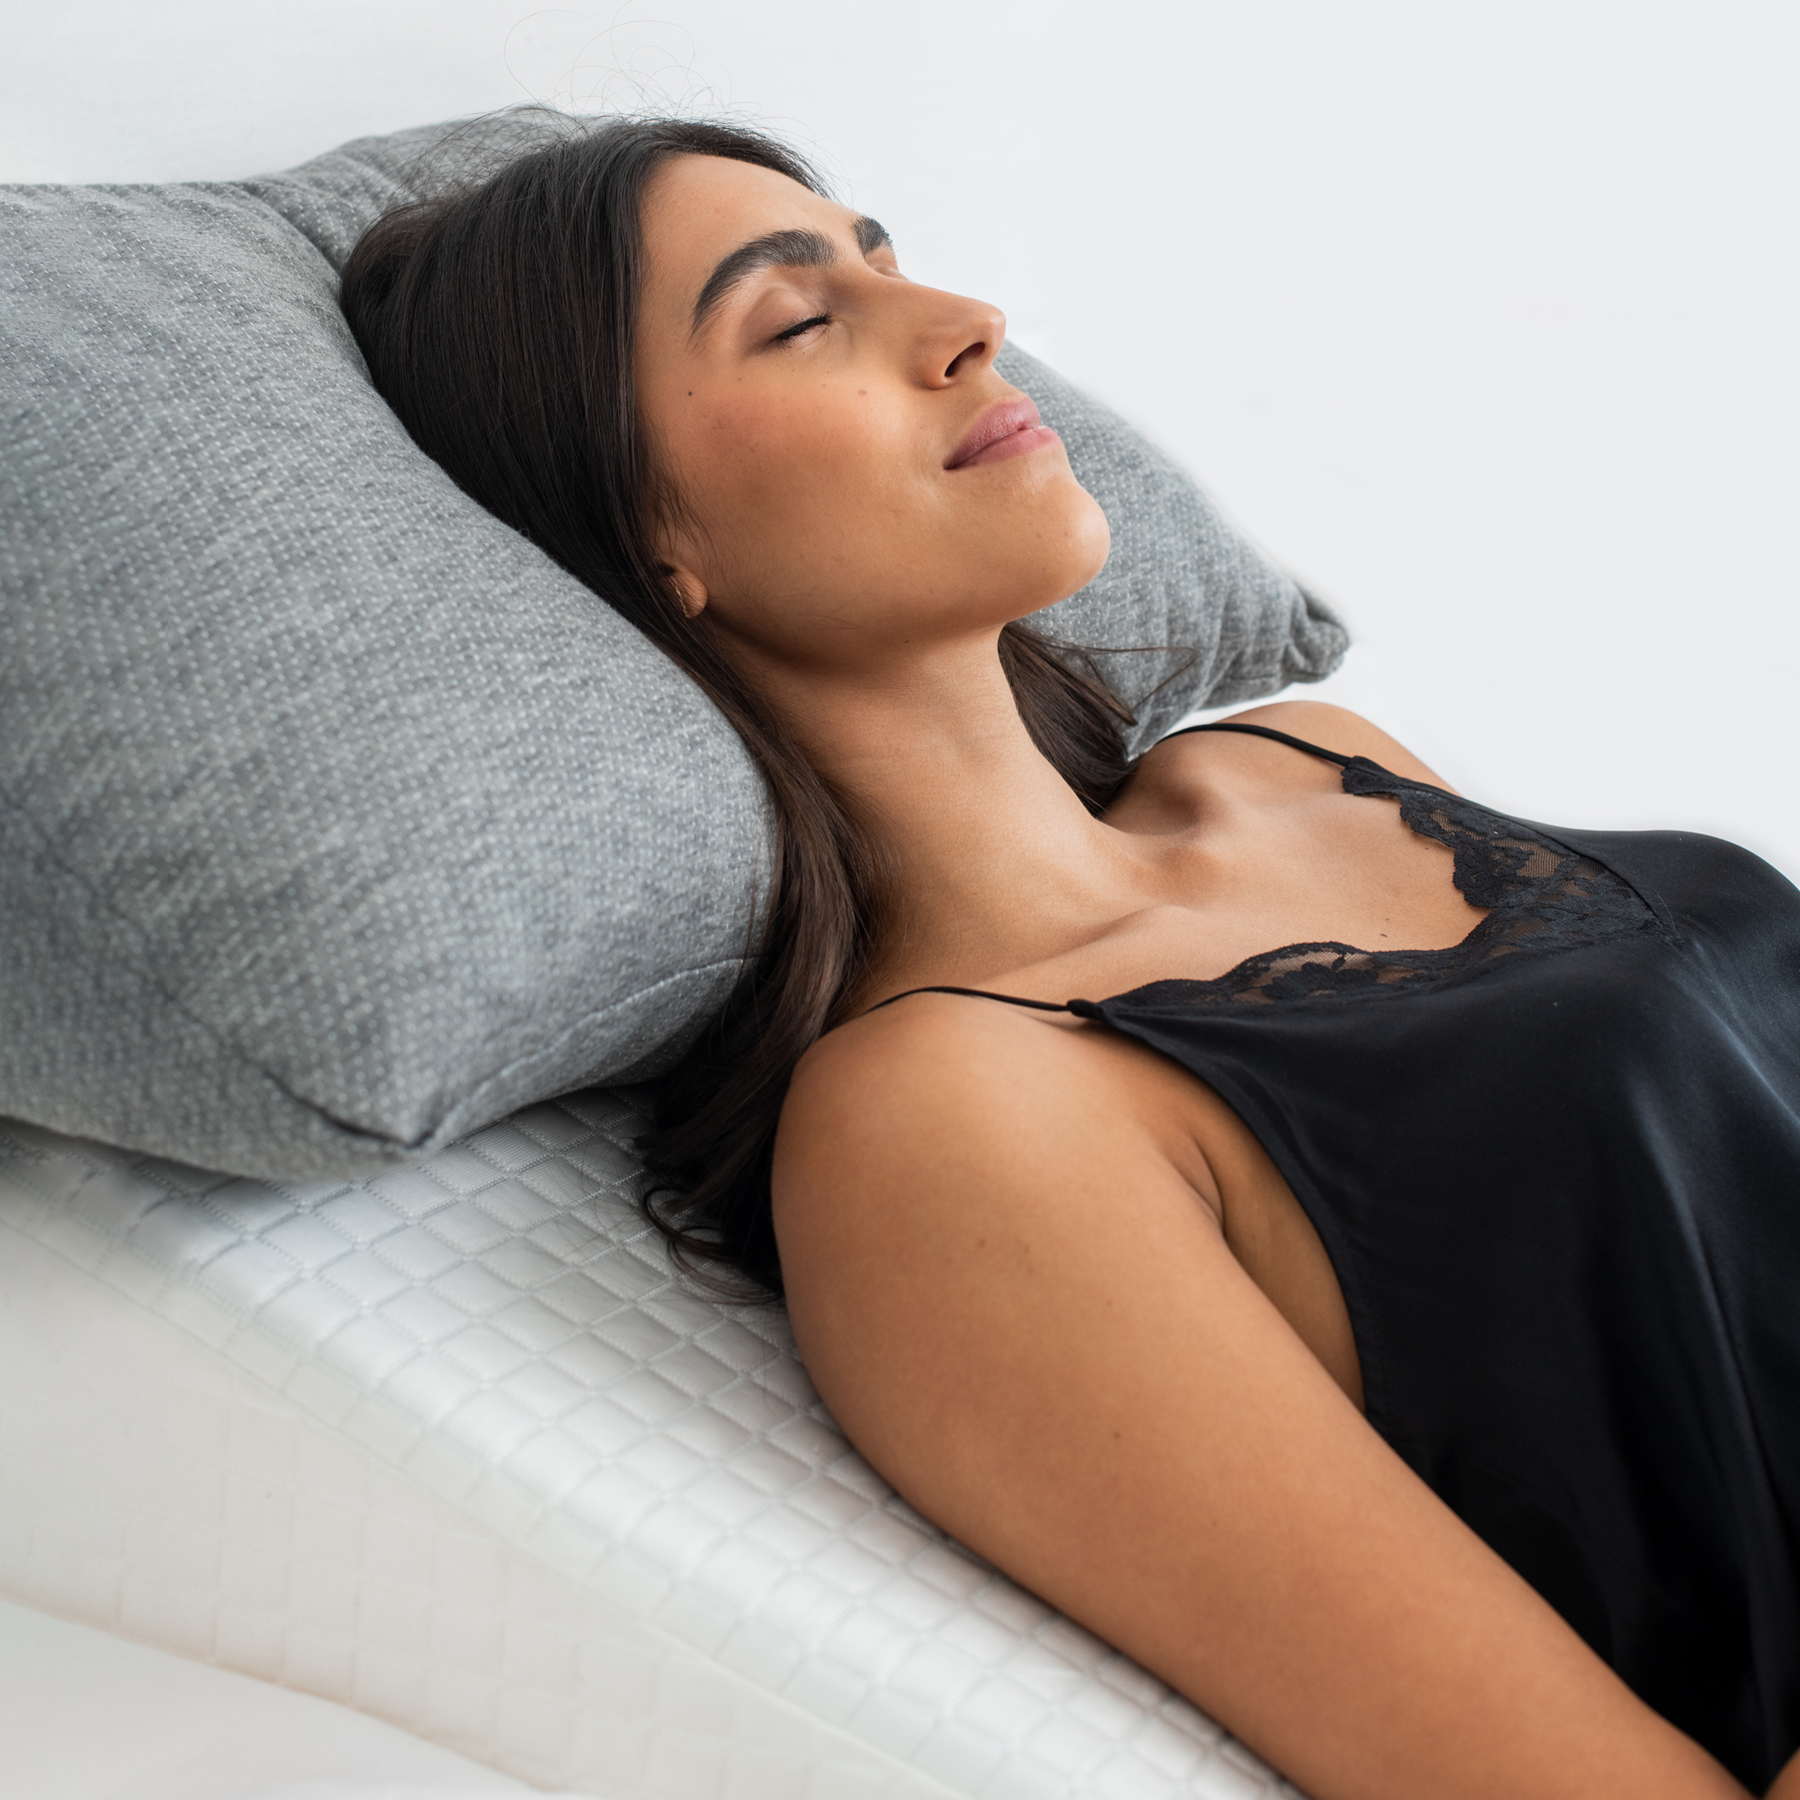 Lumbar Support Wedge Pillow Sleep Adjustable Bed Cushion Lower